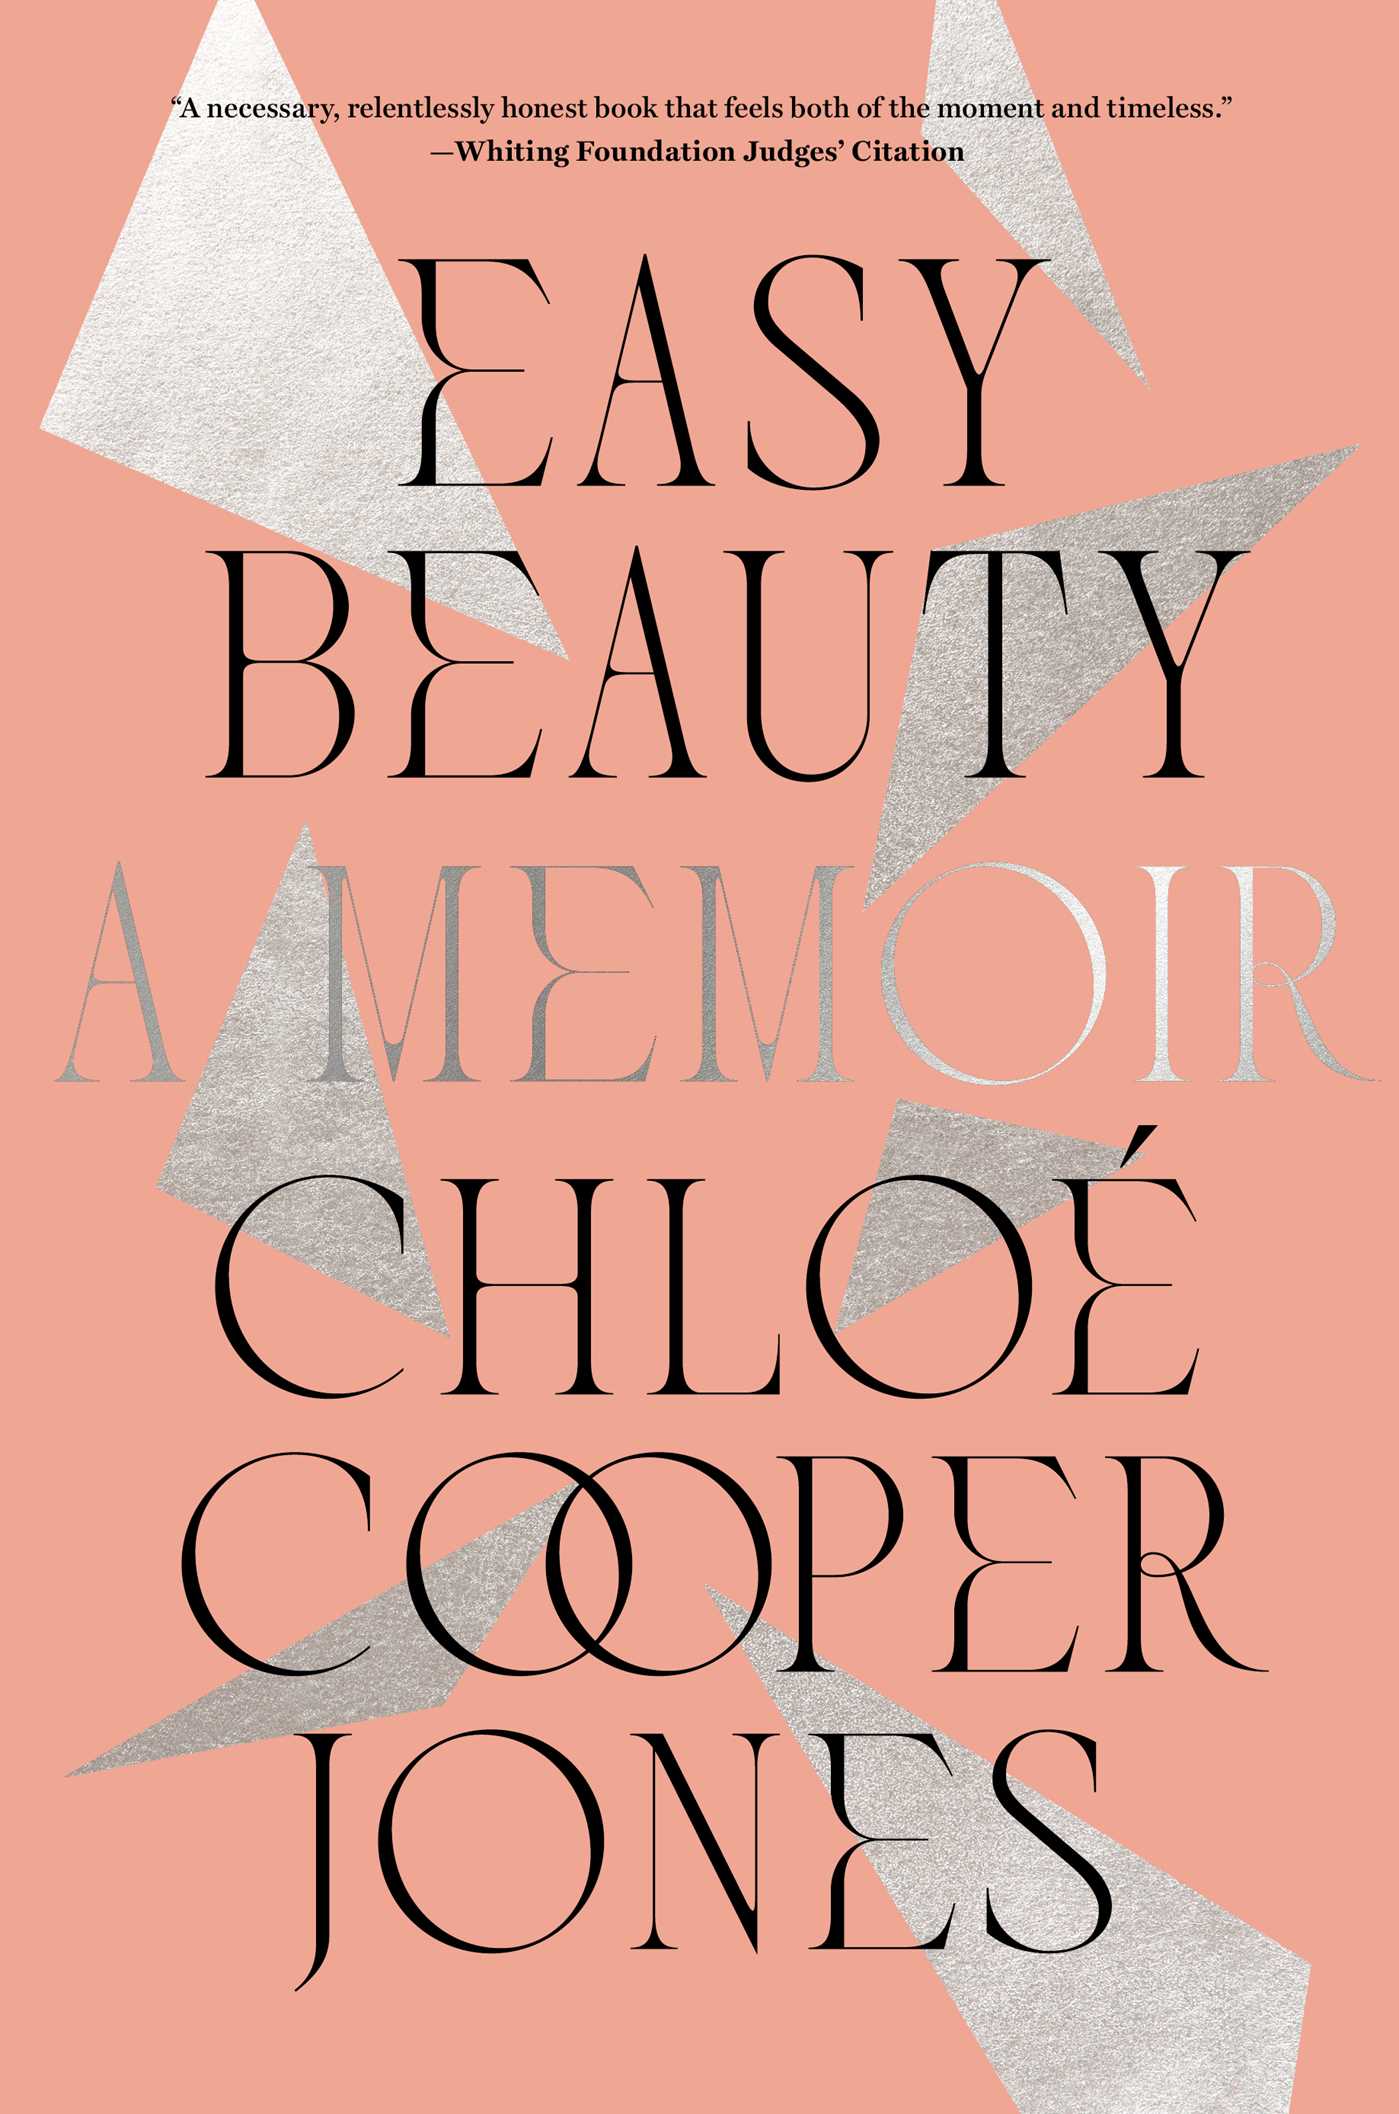 Easy Beauty by Chloé Cooper Jones Free Download